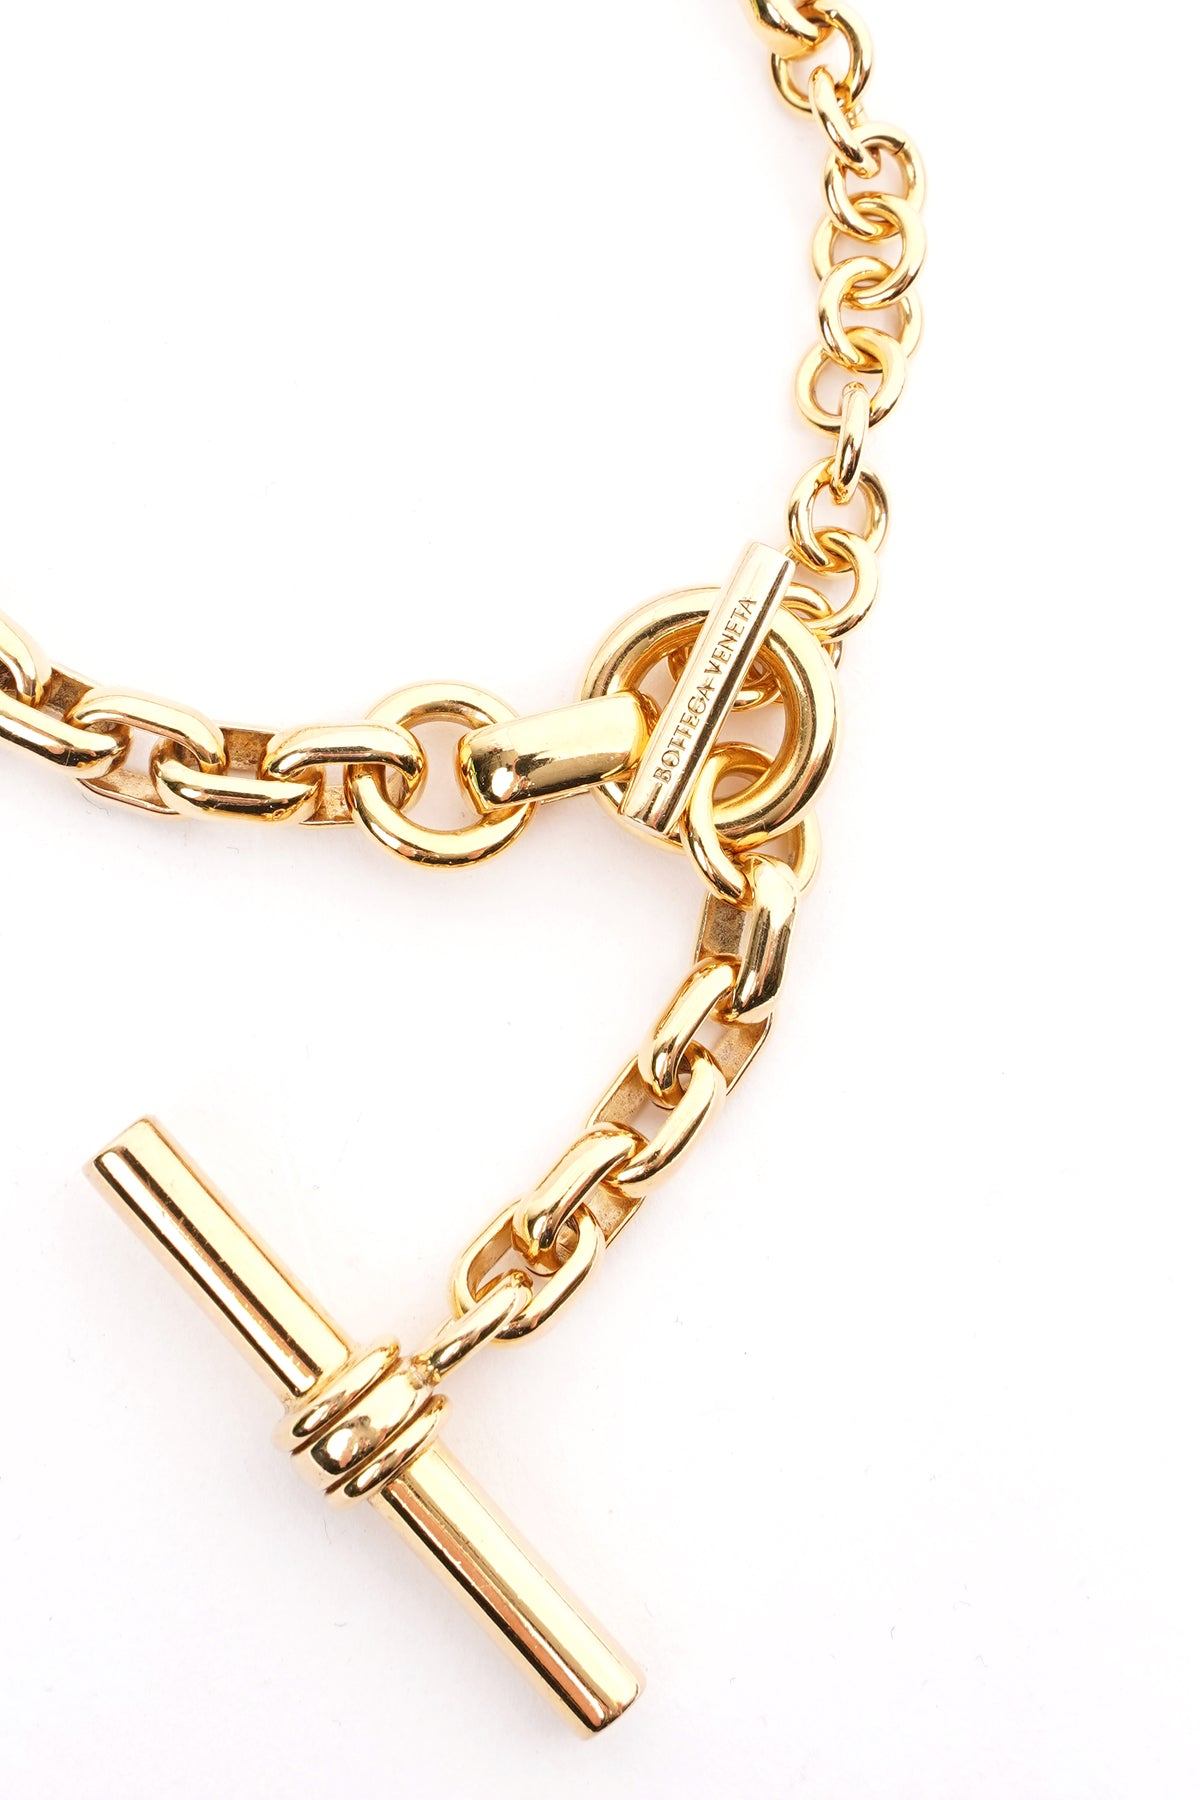 Bottega Veneta Gold & Silver Chain Bracelet